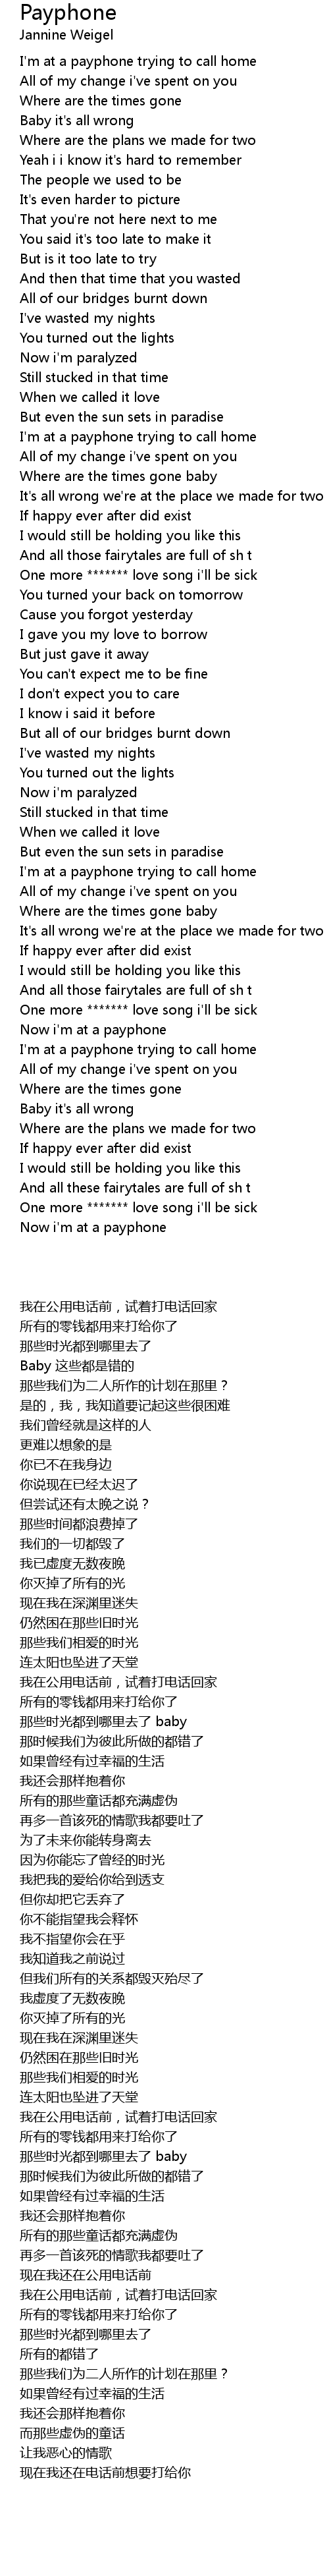 Payphone lyrics